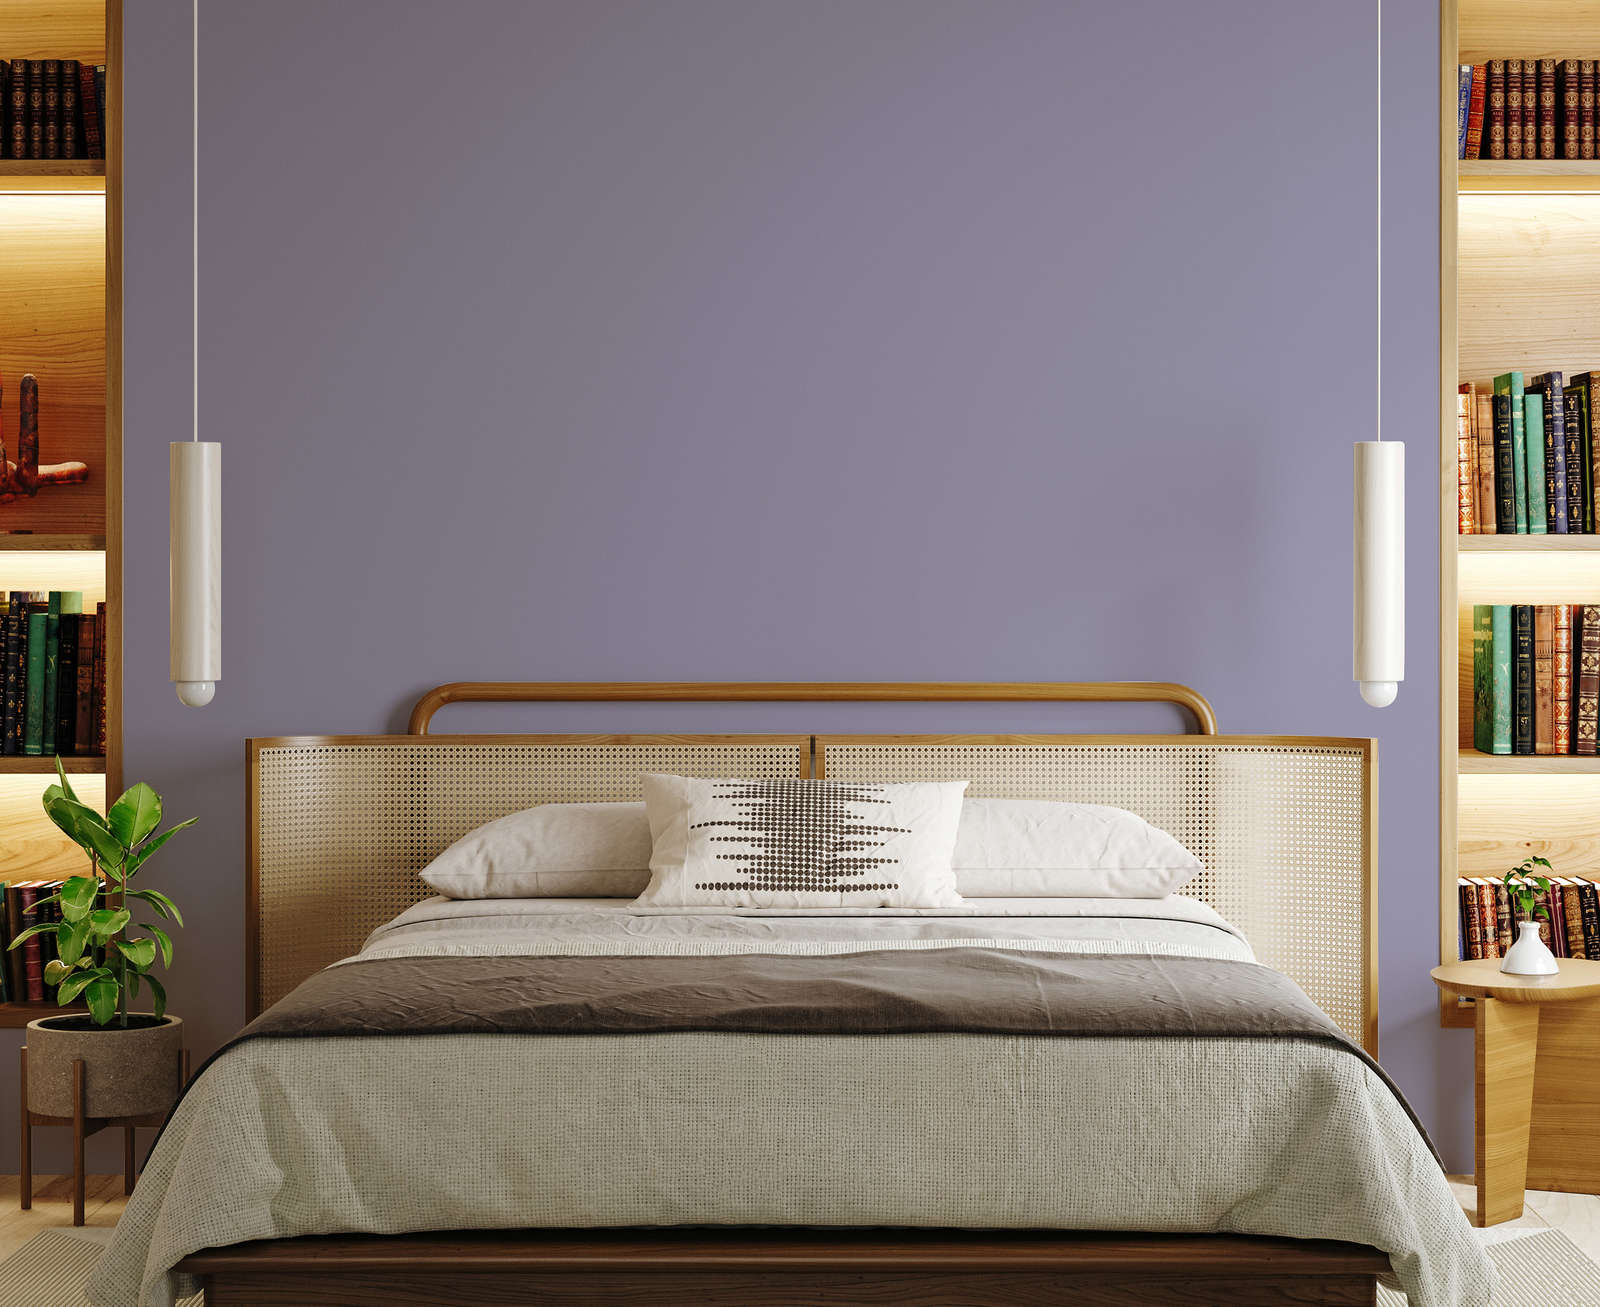             Premium Wall Paint sensitive lilac »Magical Mauve« NW204 – 1 litre
        